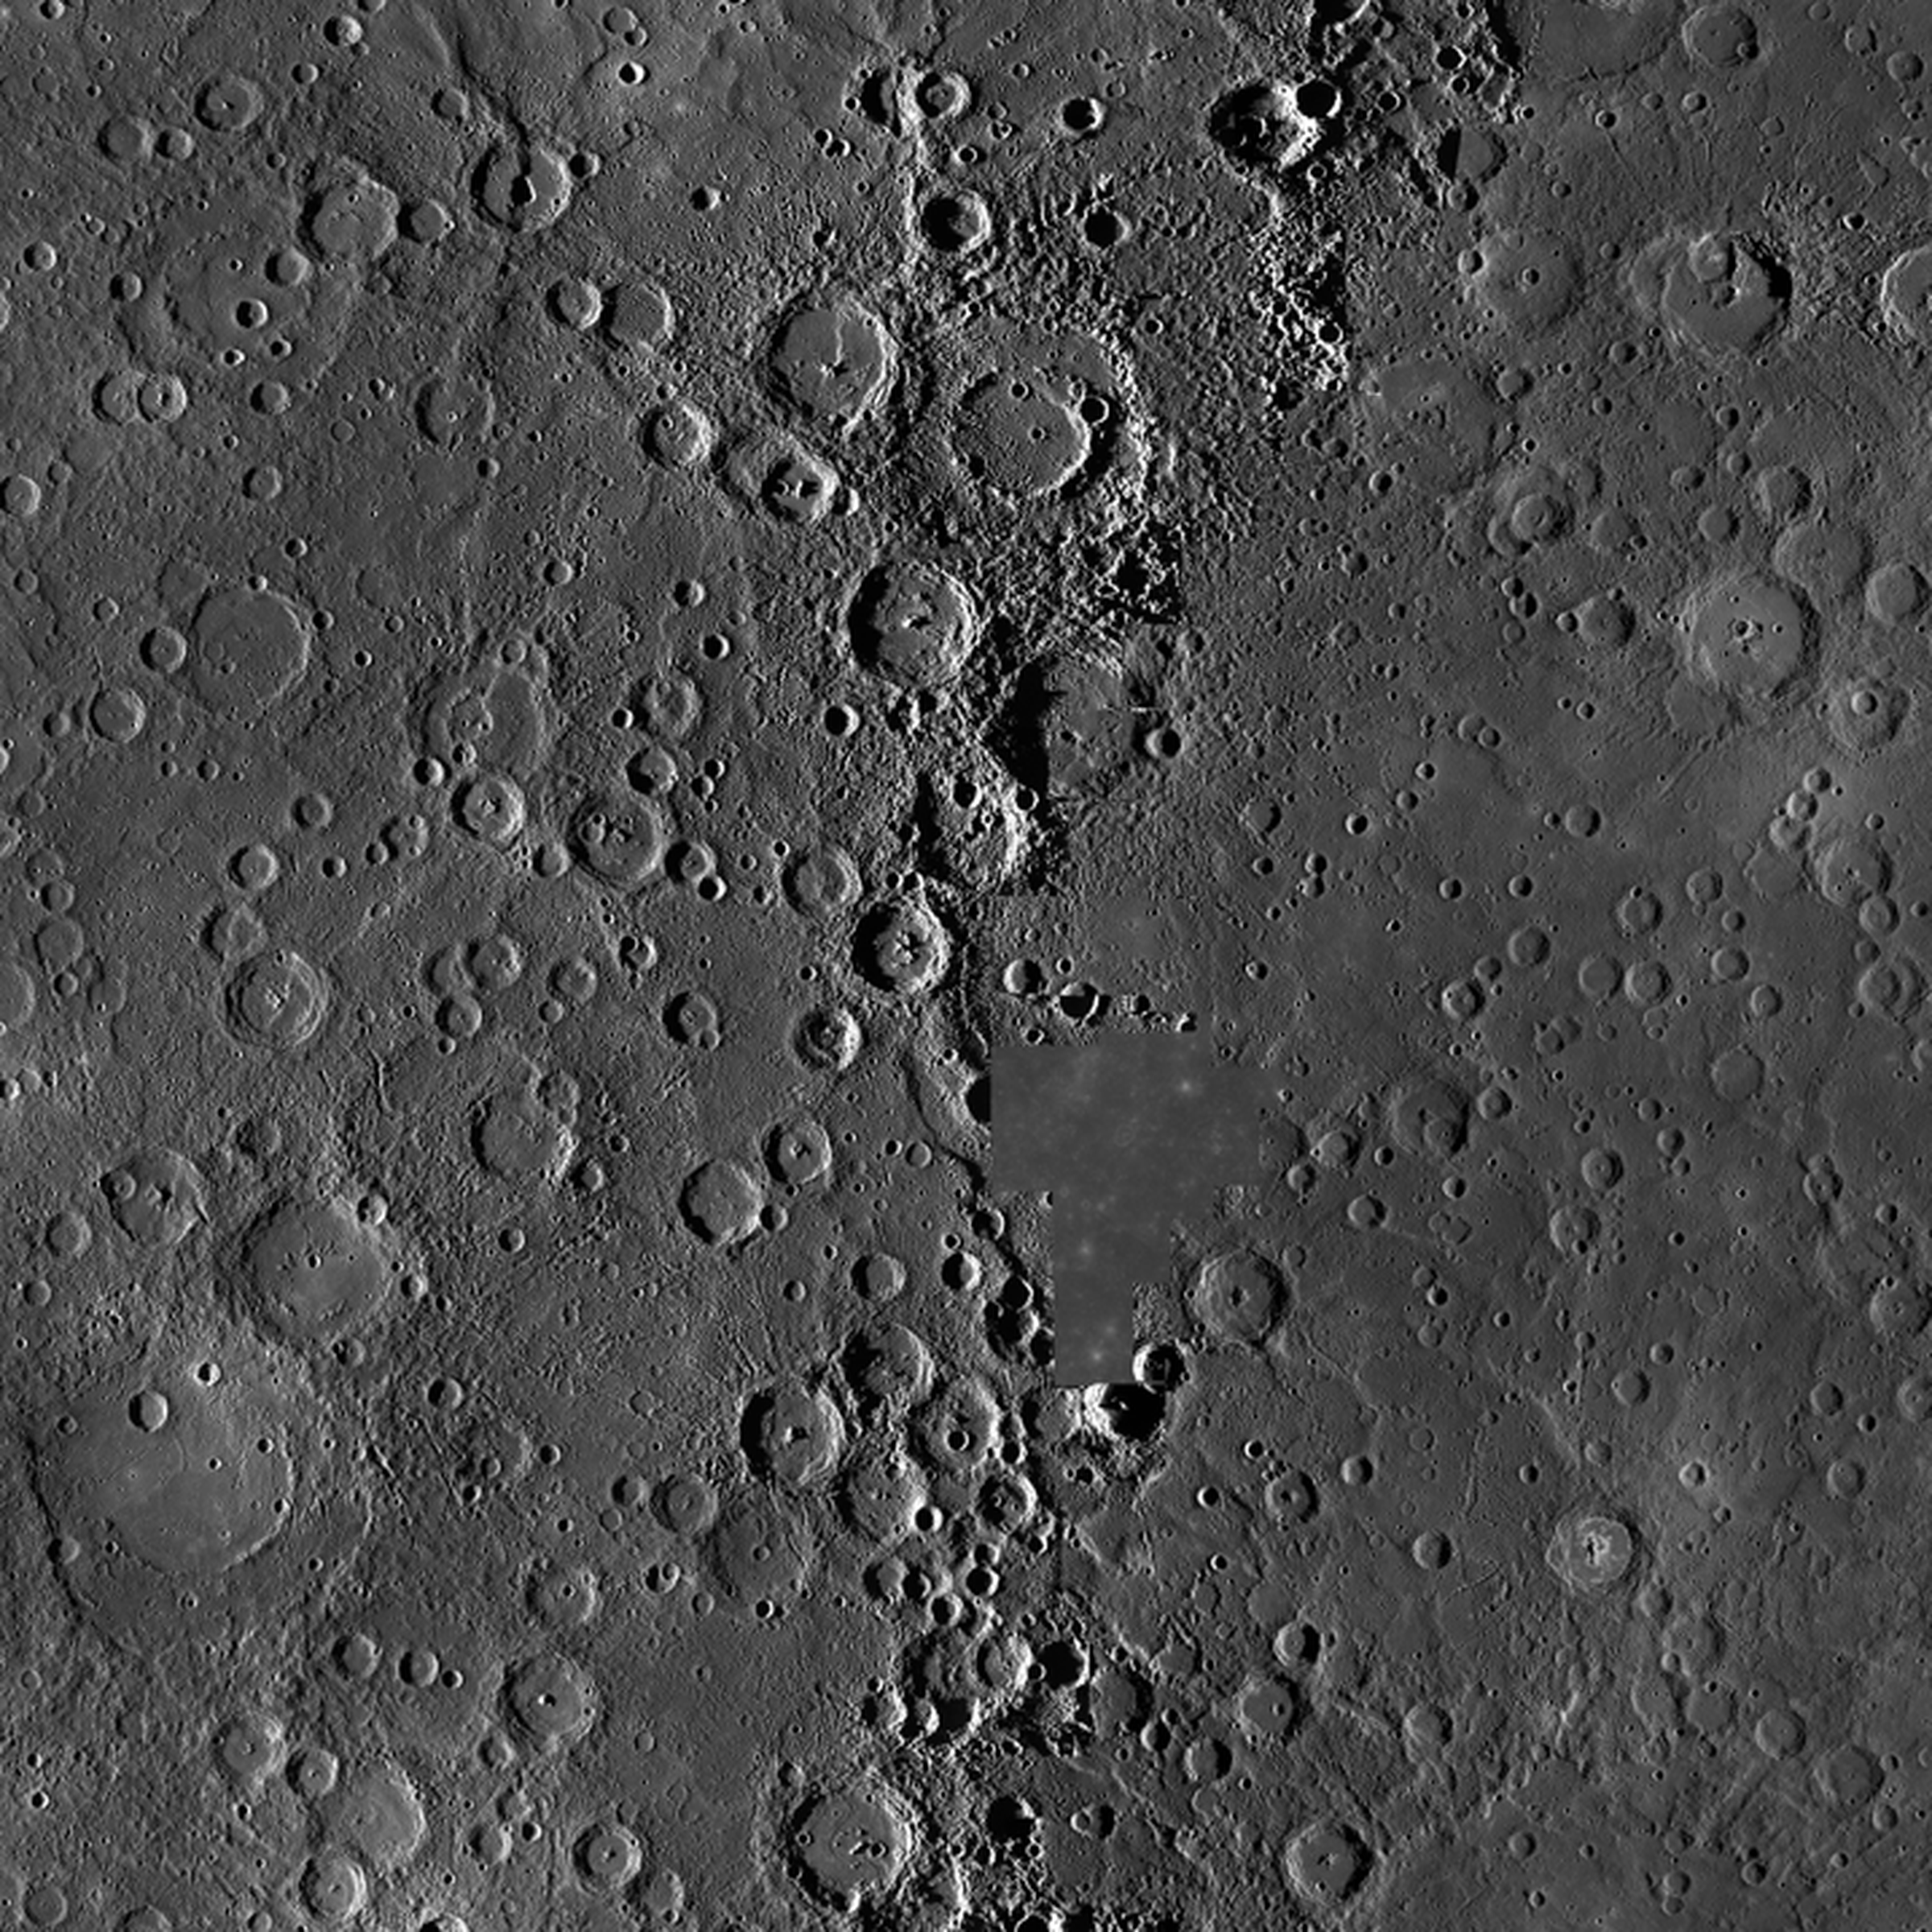 High-res Mercury map (NASA)